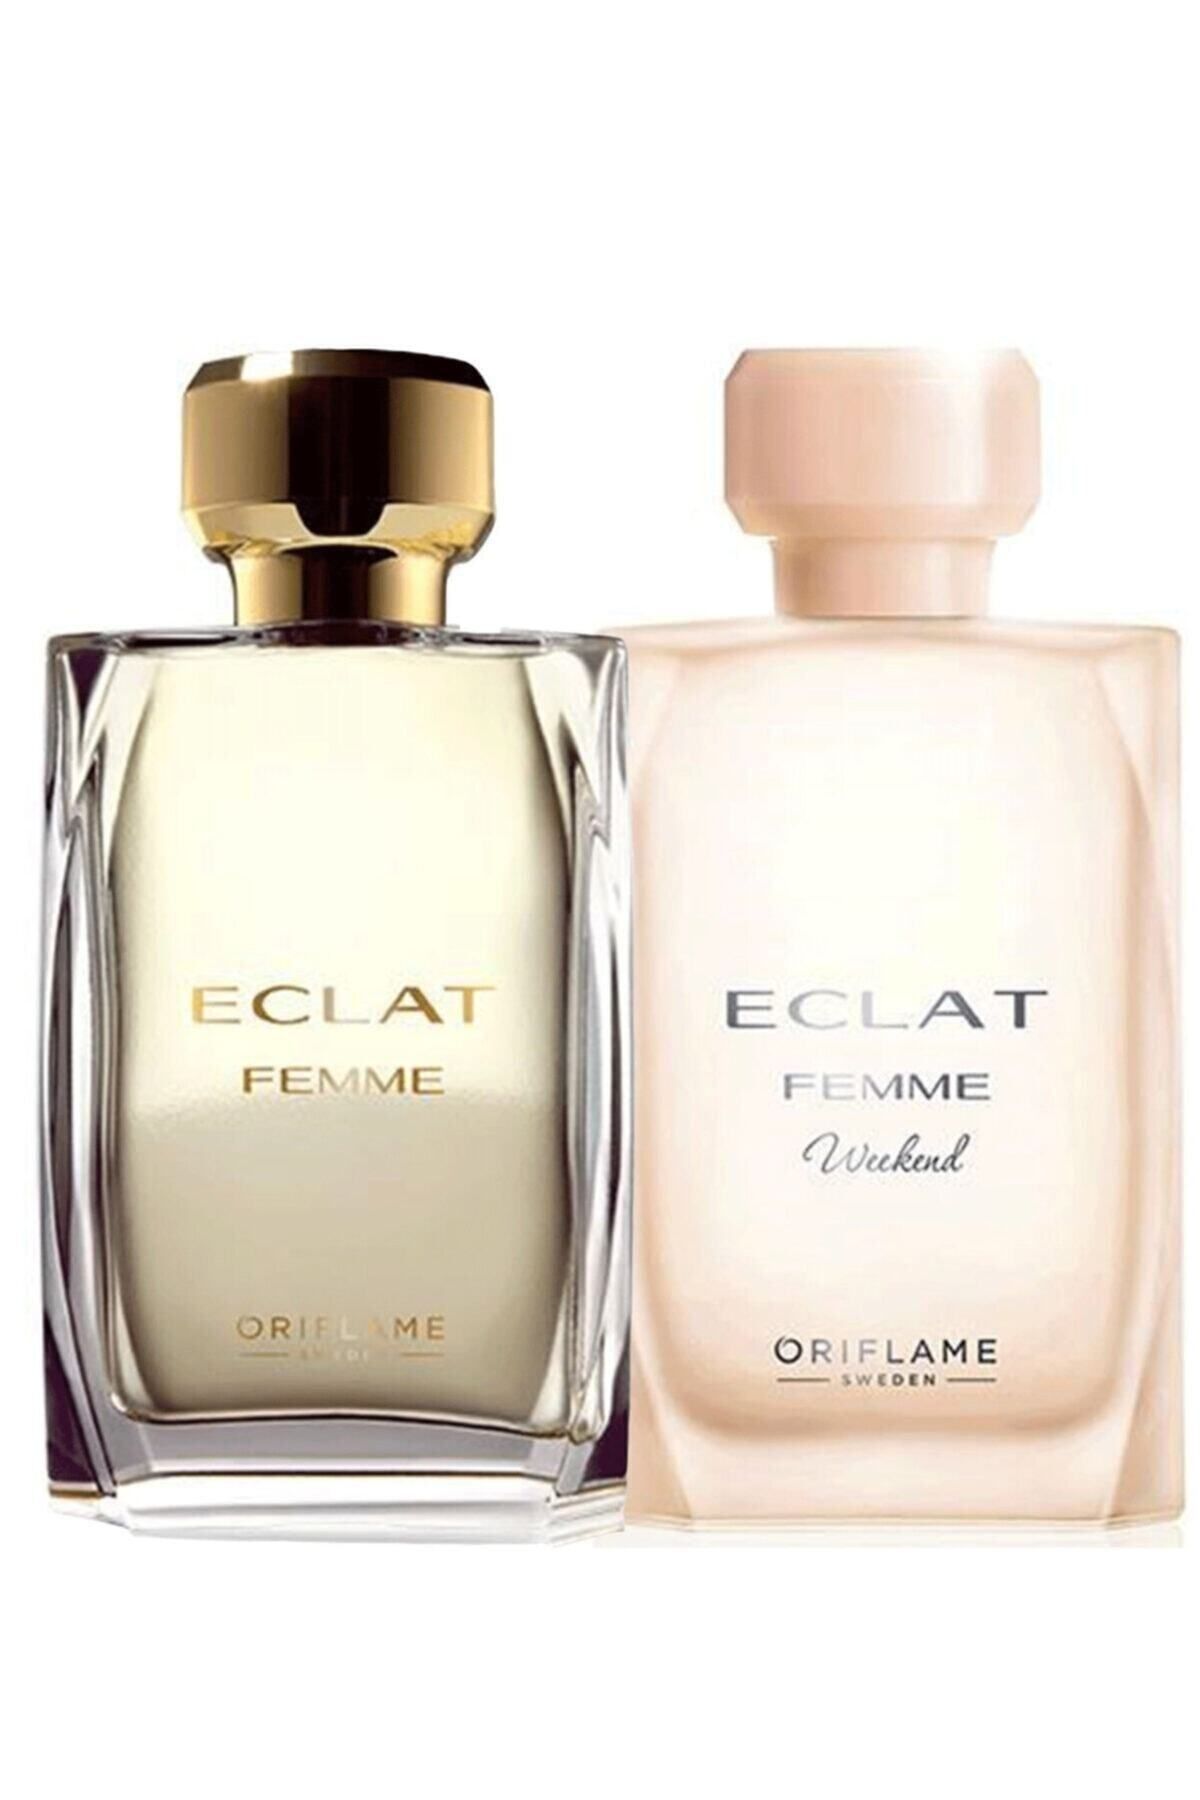 Oriflame Eclat Femme Weekend Edt 50 ml Kadın Parfüm+Eclat Femme Edt 50 ml Kadın Parfüm Set ELİTKOZMETİK-35463